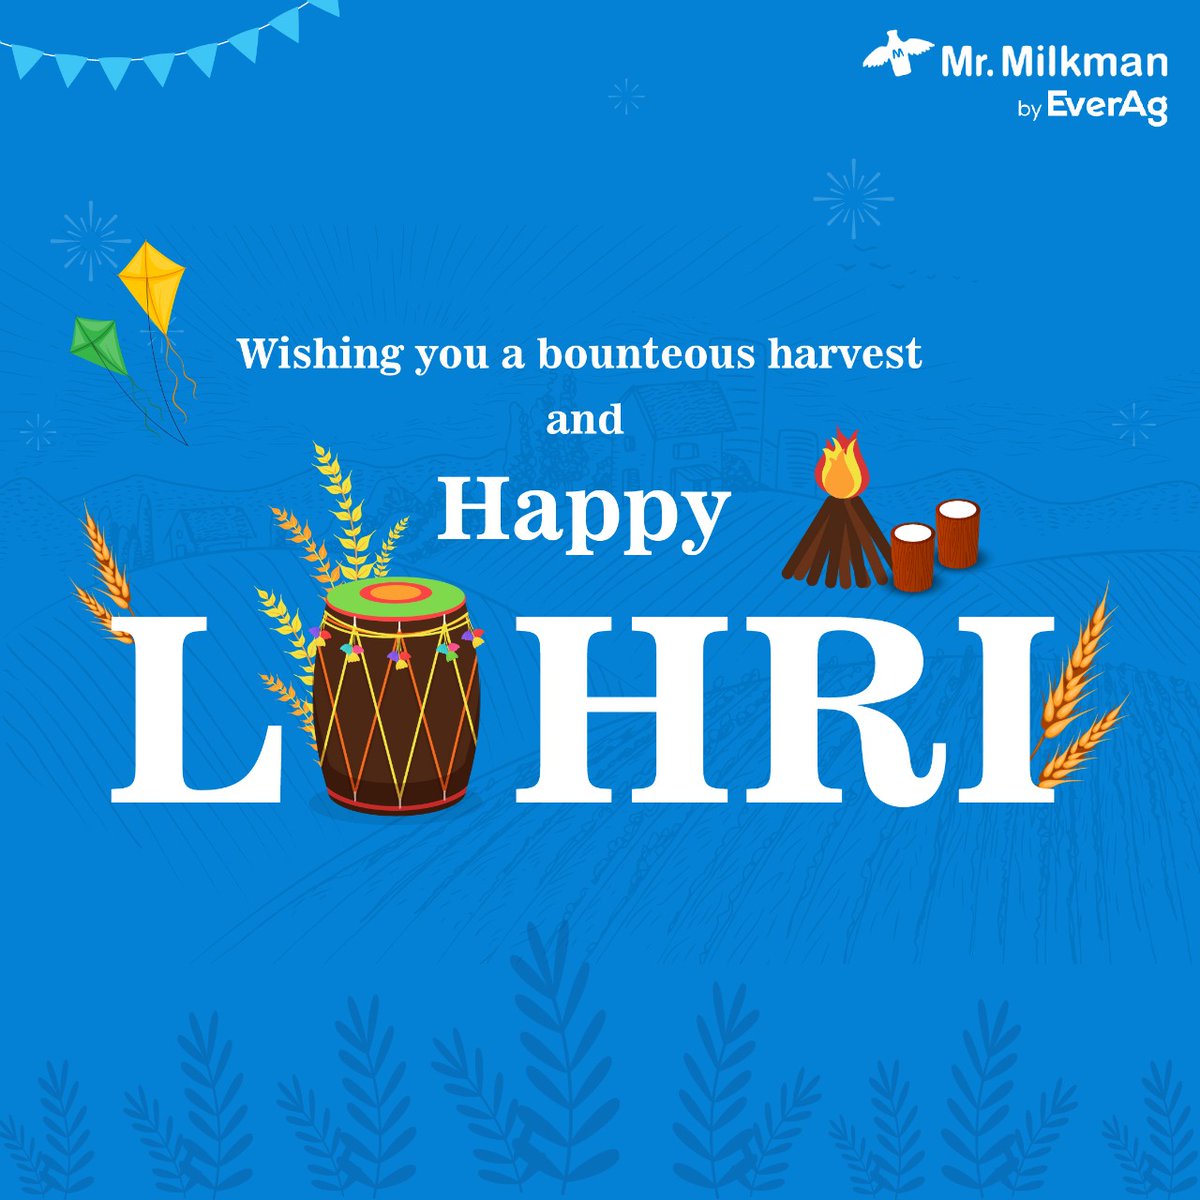 Warm wishes on Lohri from the team at Mr.Milkman! May this harvest season bring abundance into our lives. 

#Lohri #HappyLohri #FestivalsOfIndia #MrMilkman #EverAg #AgriTech #DairyFarms #DairyFarming